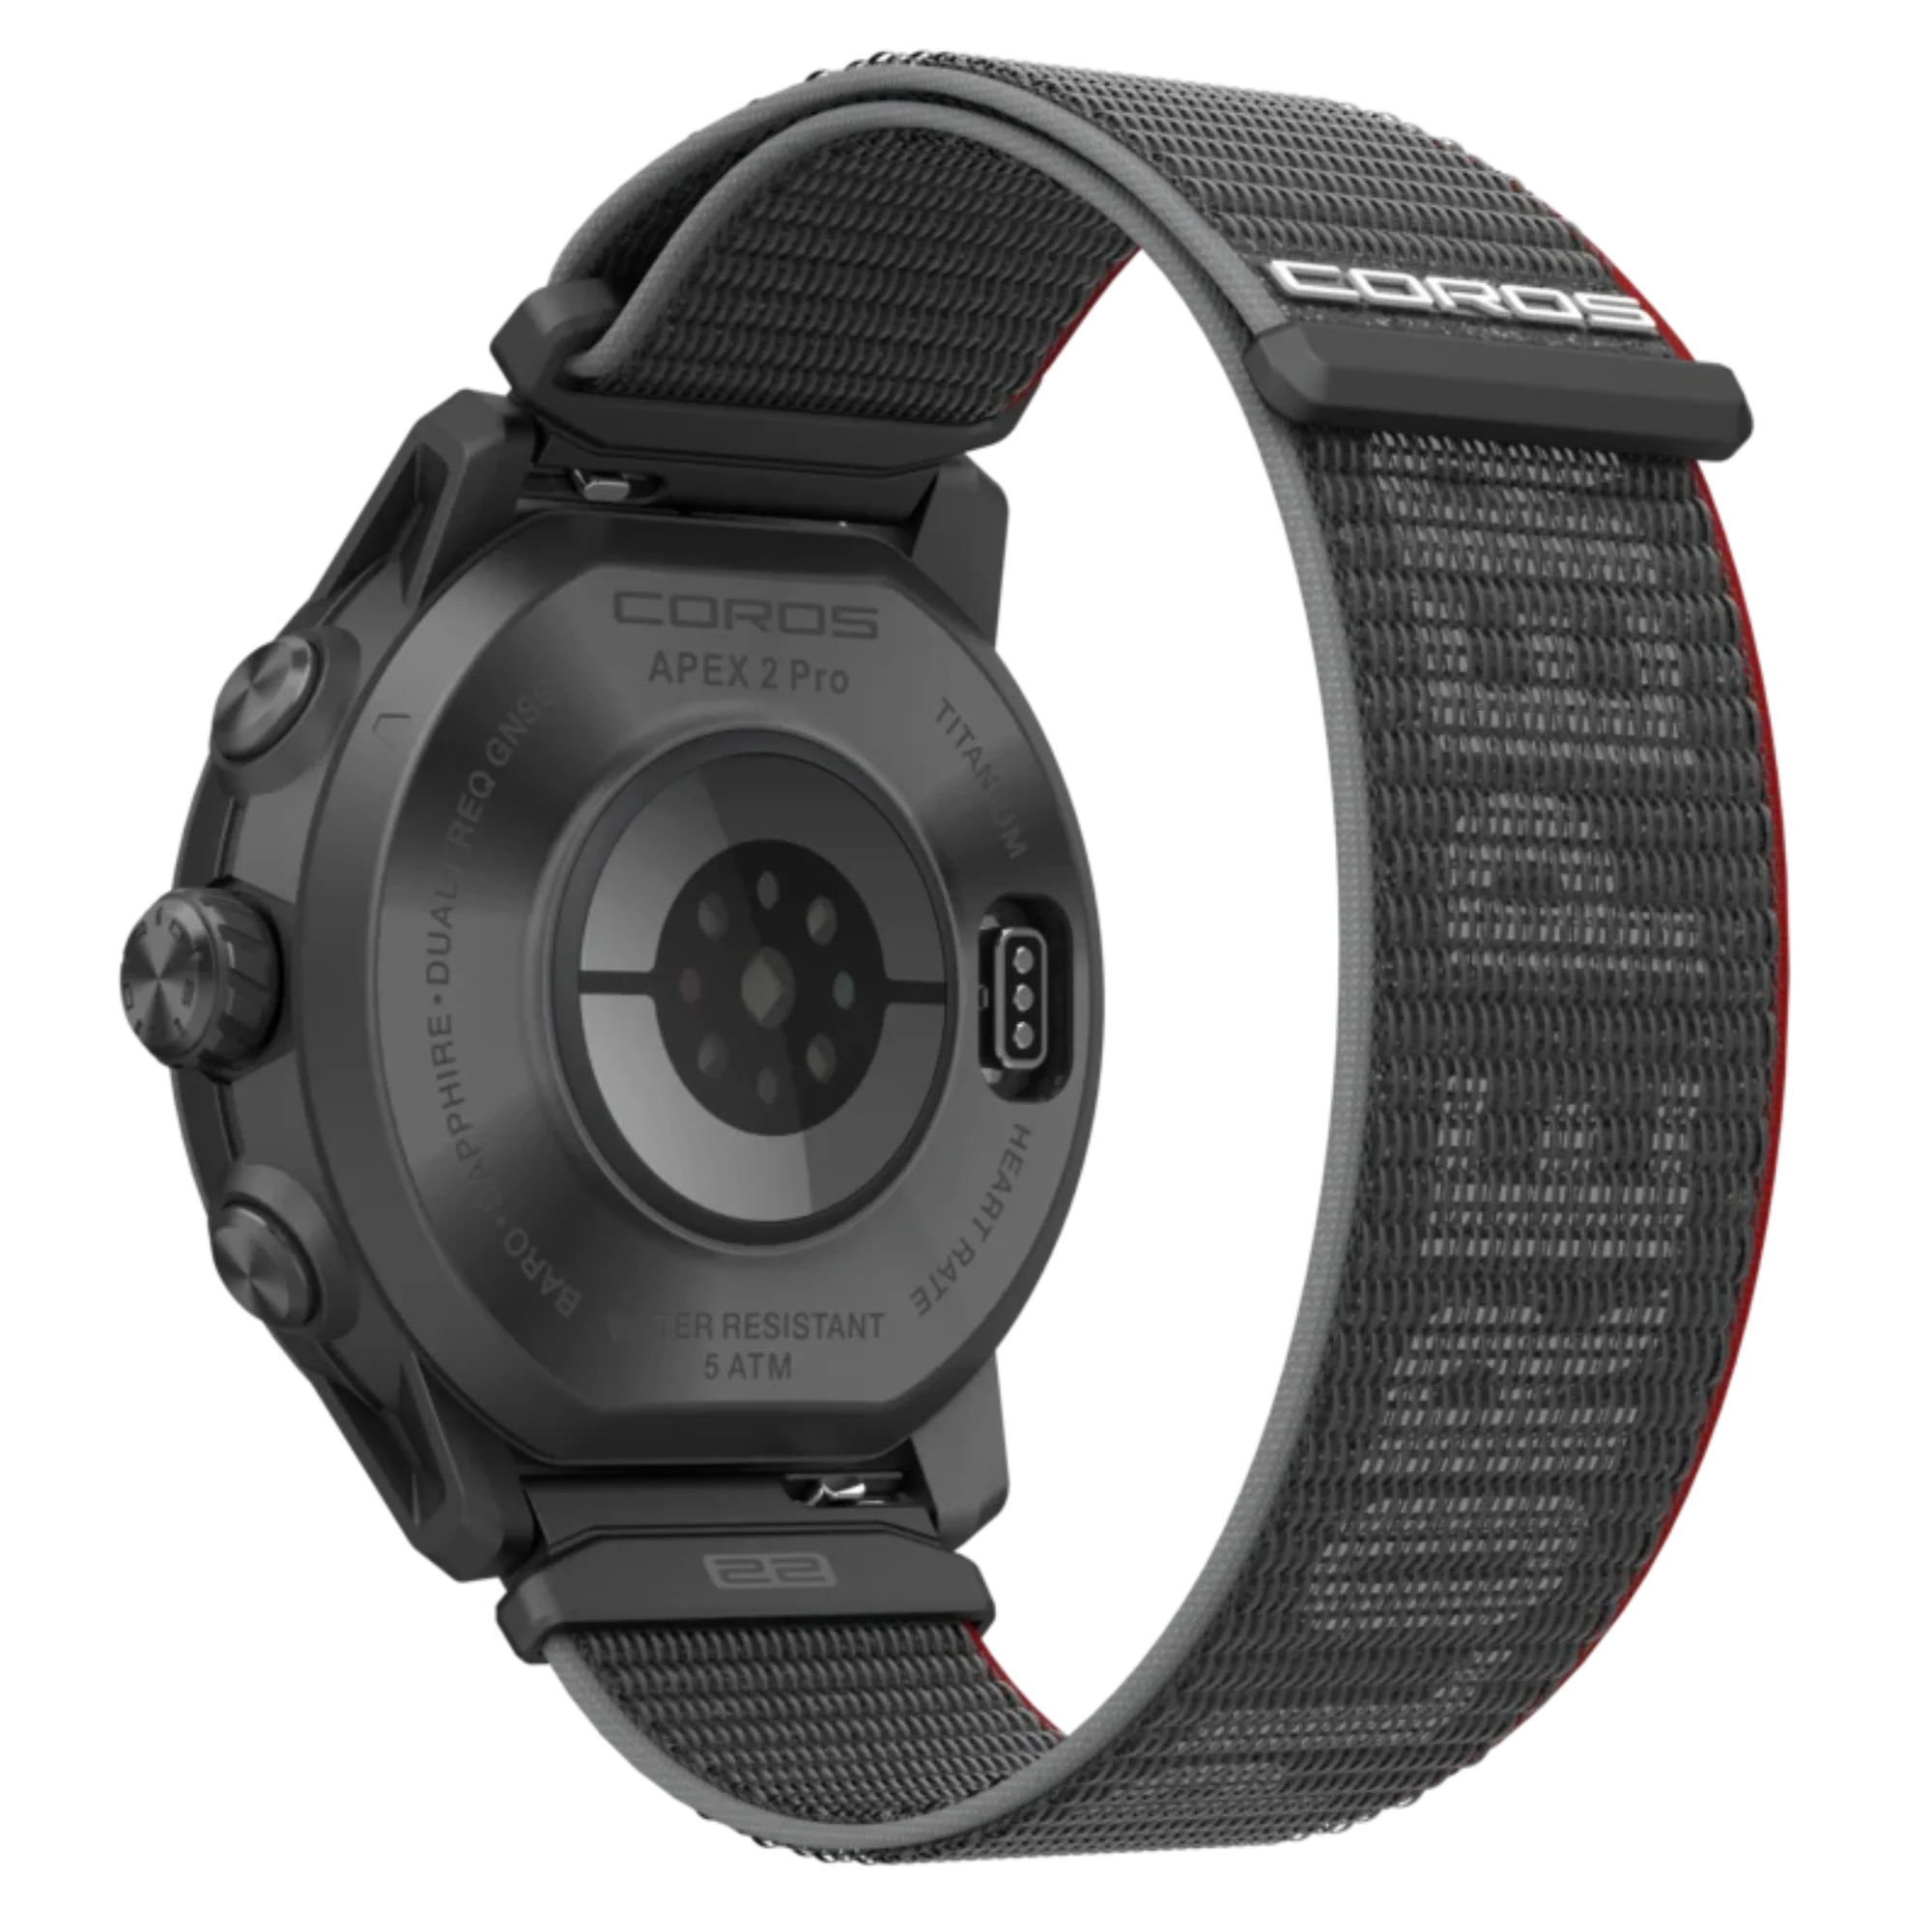 Foto: Smartwatch Coros APEX 2 Pro